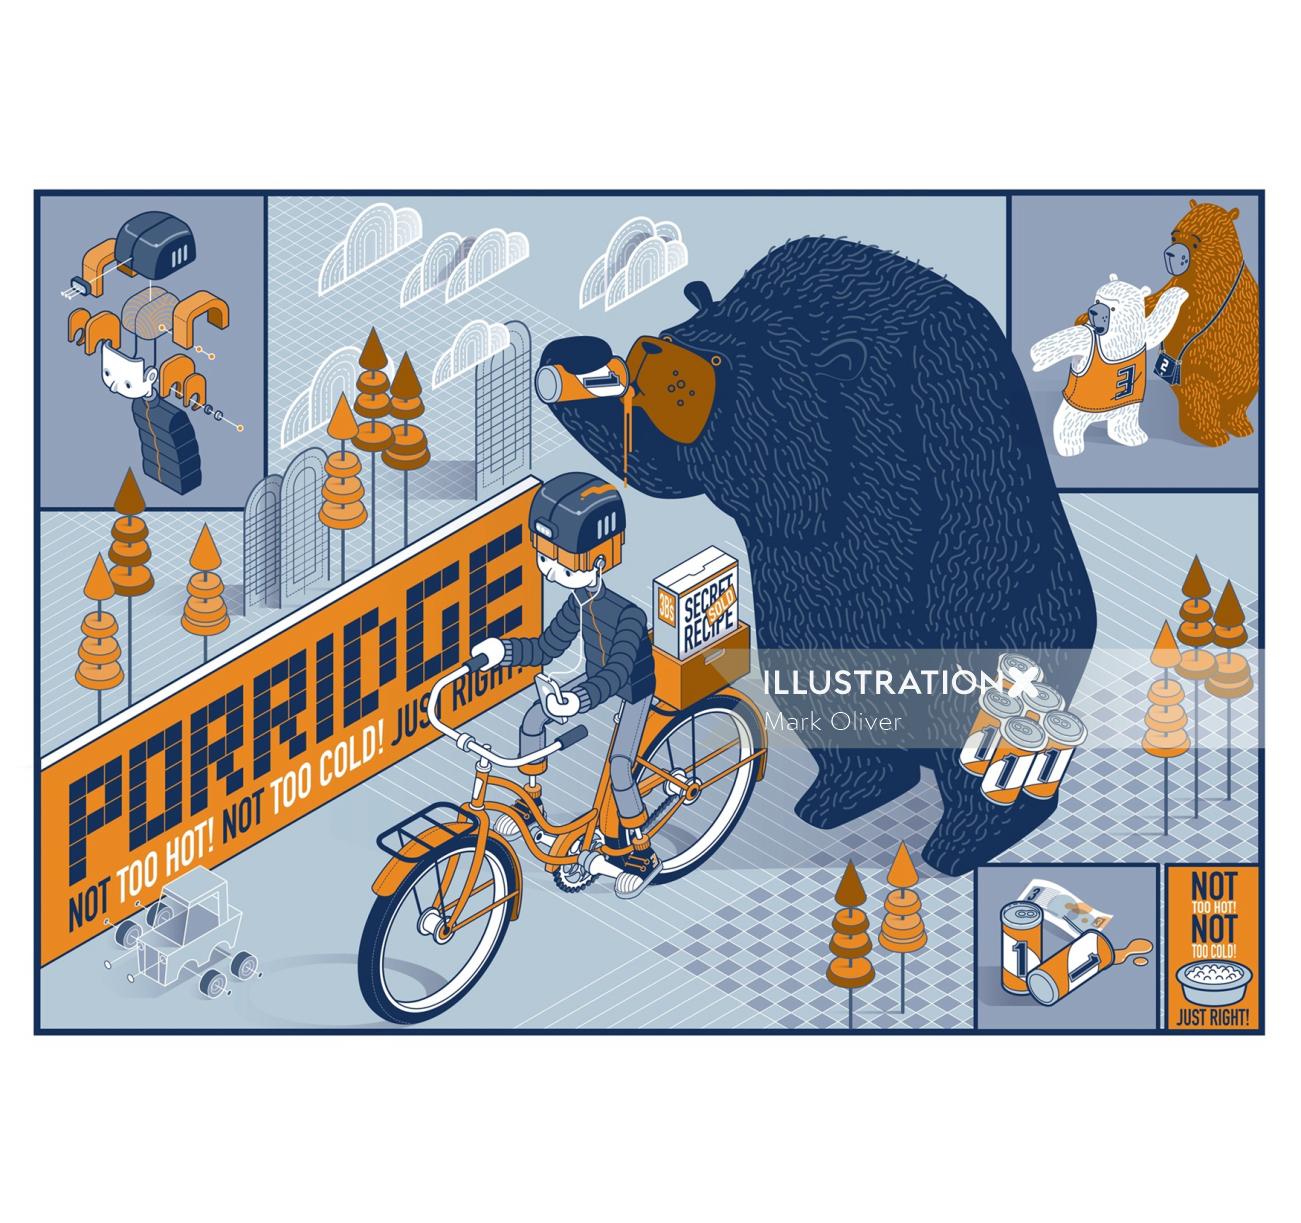 Porridge advertising illustration